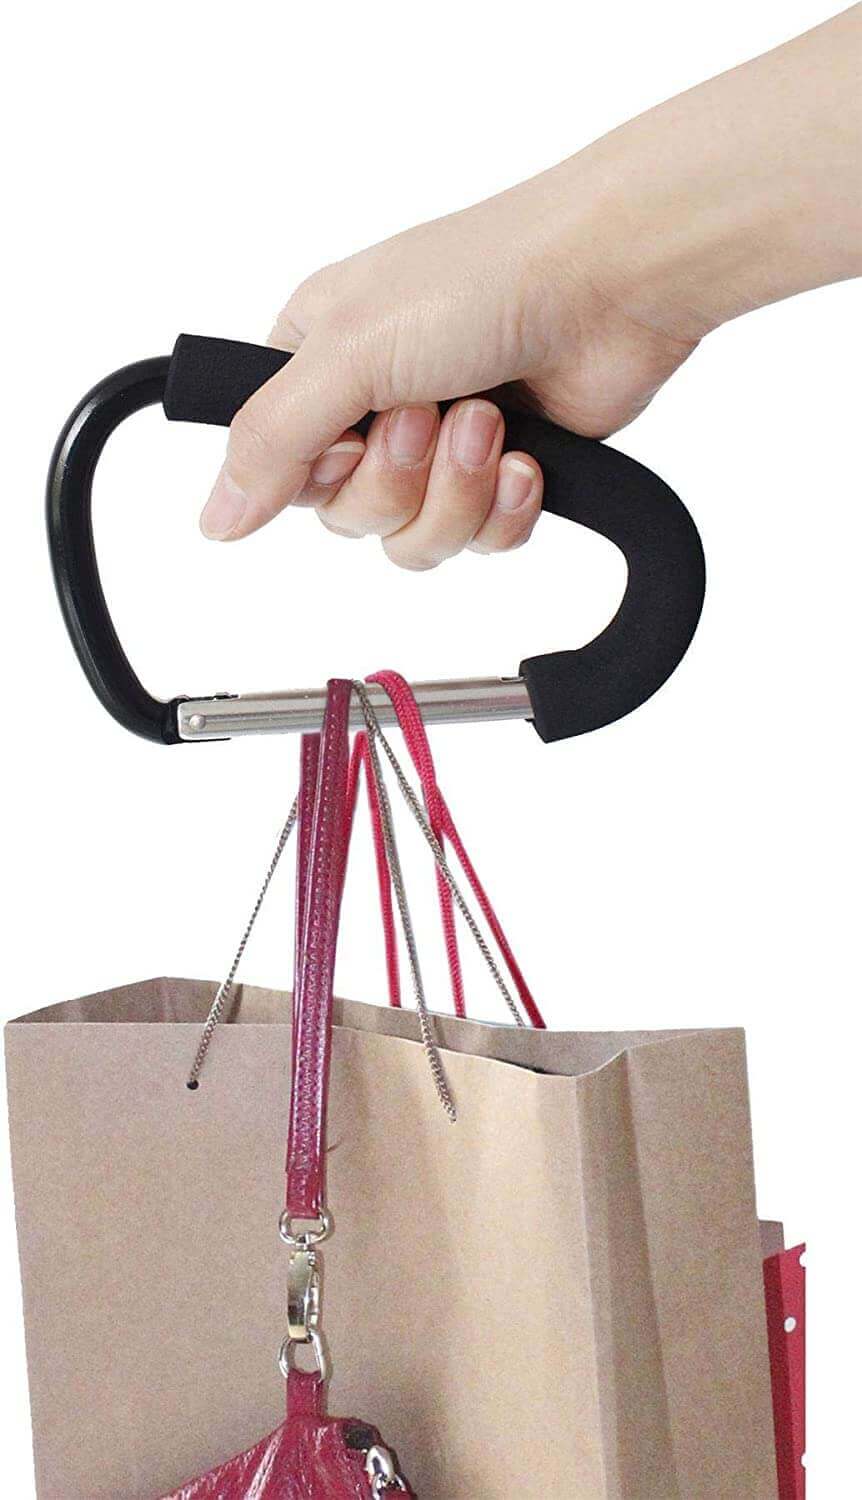 ClippasafeBig Bag Stroller Clipbaby care safetyEarthlets